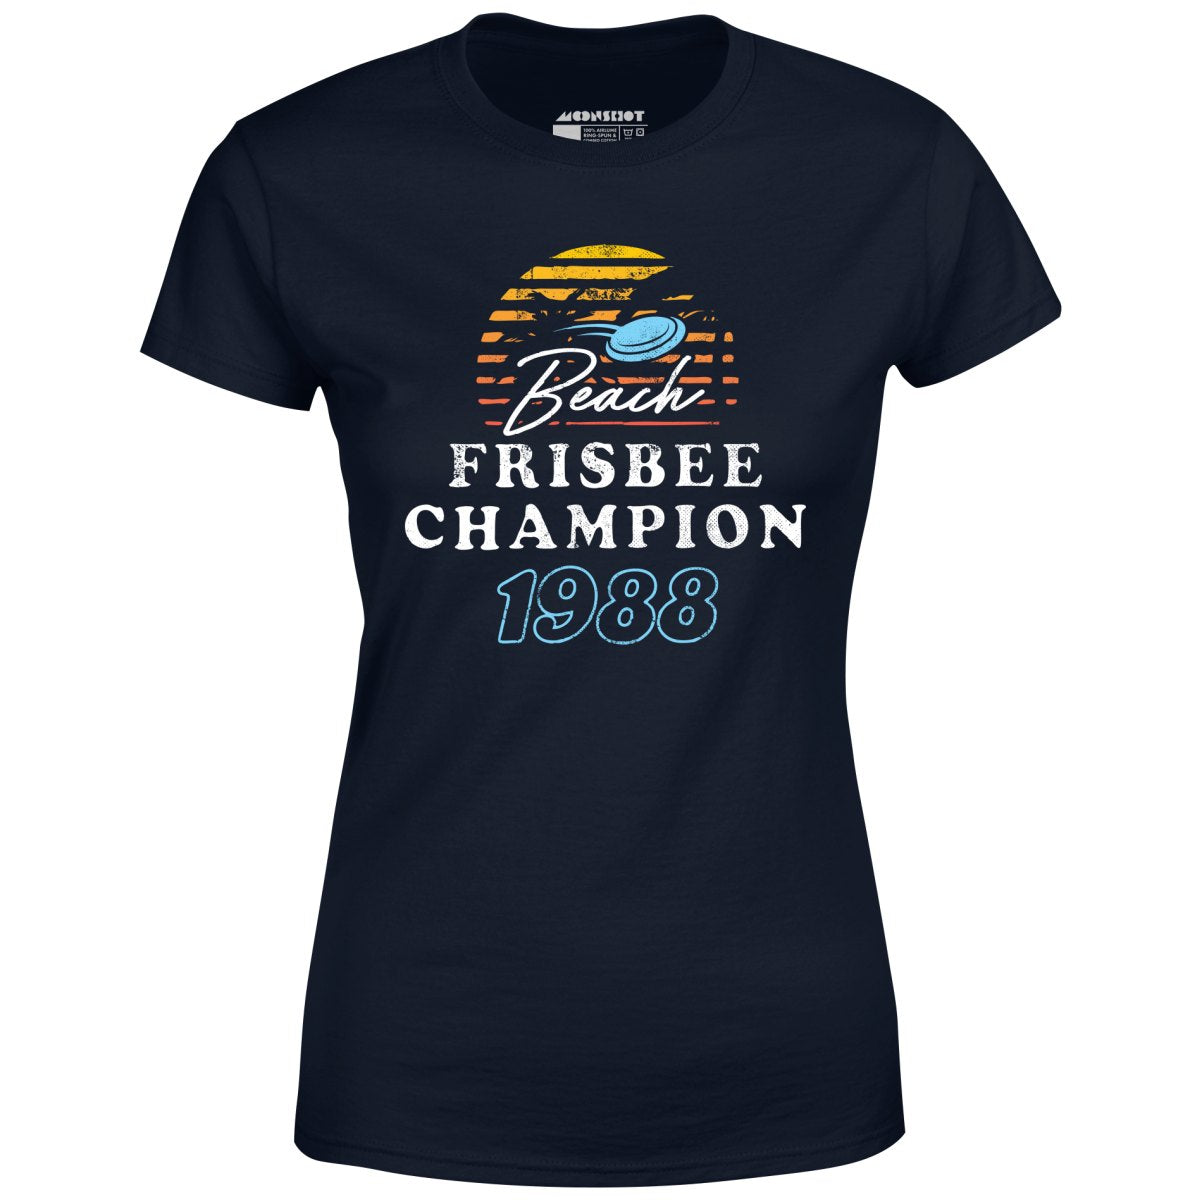 Beach Frisbee Champion 1988 - Women's T-Shirt